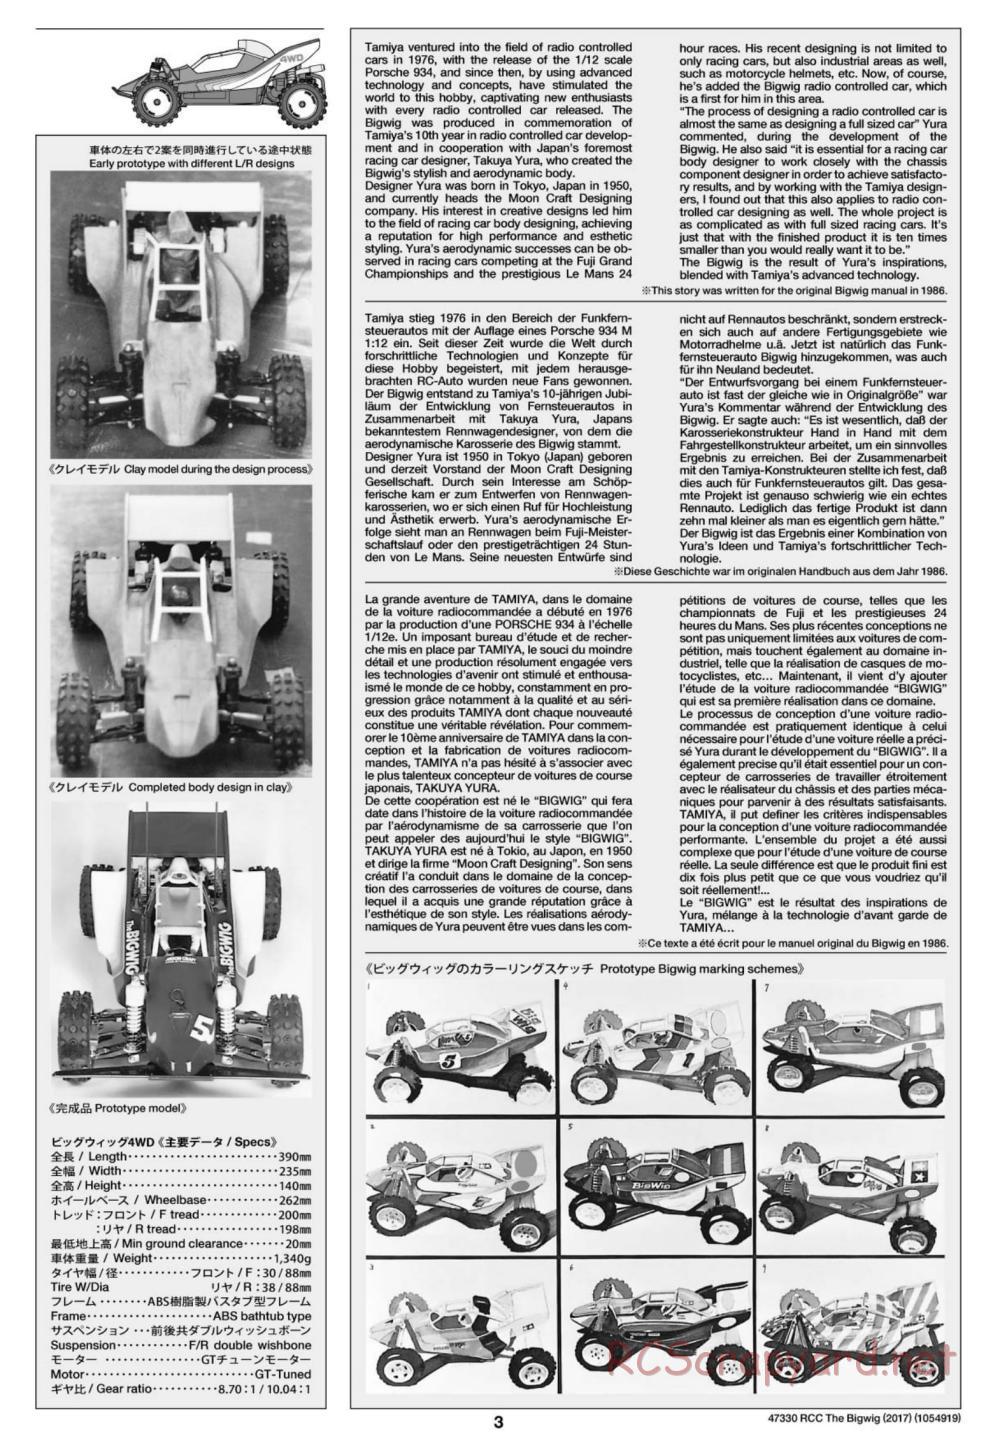 Tamiya - The Bigwig 2017 Chassis - Manual - Page 3